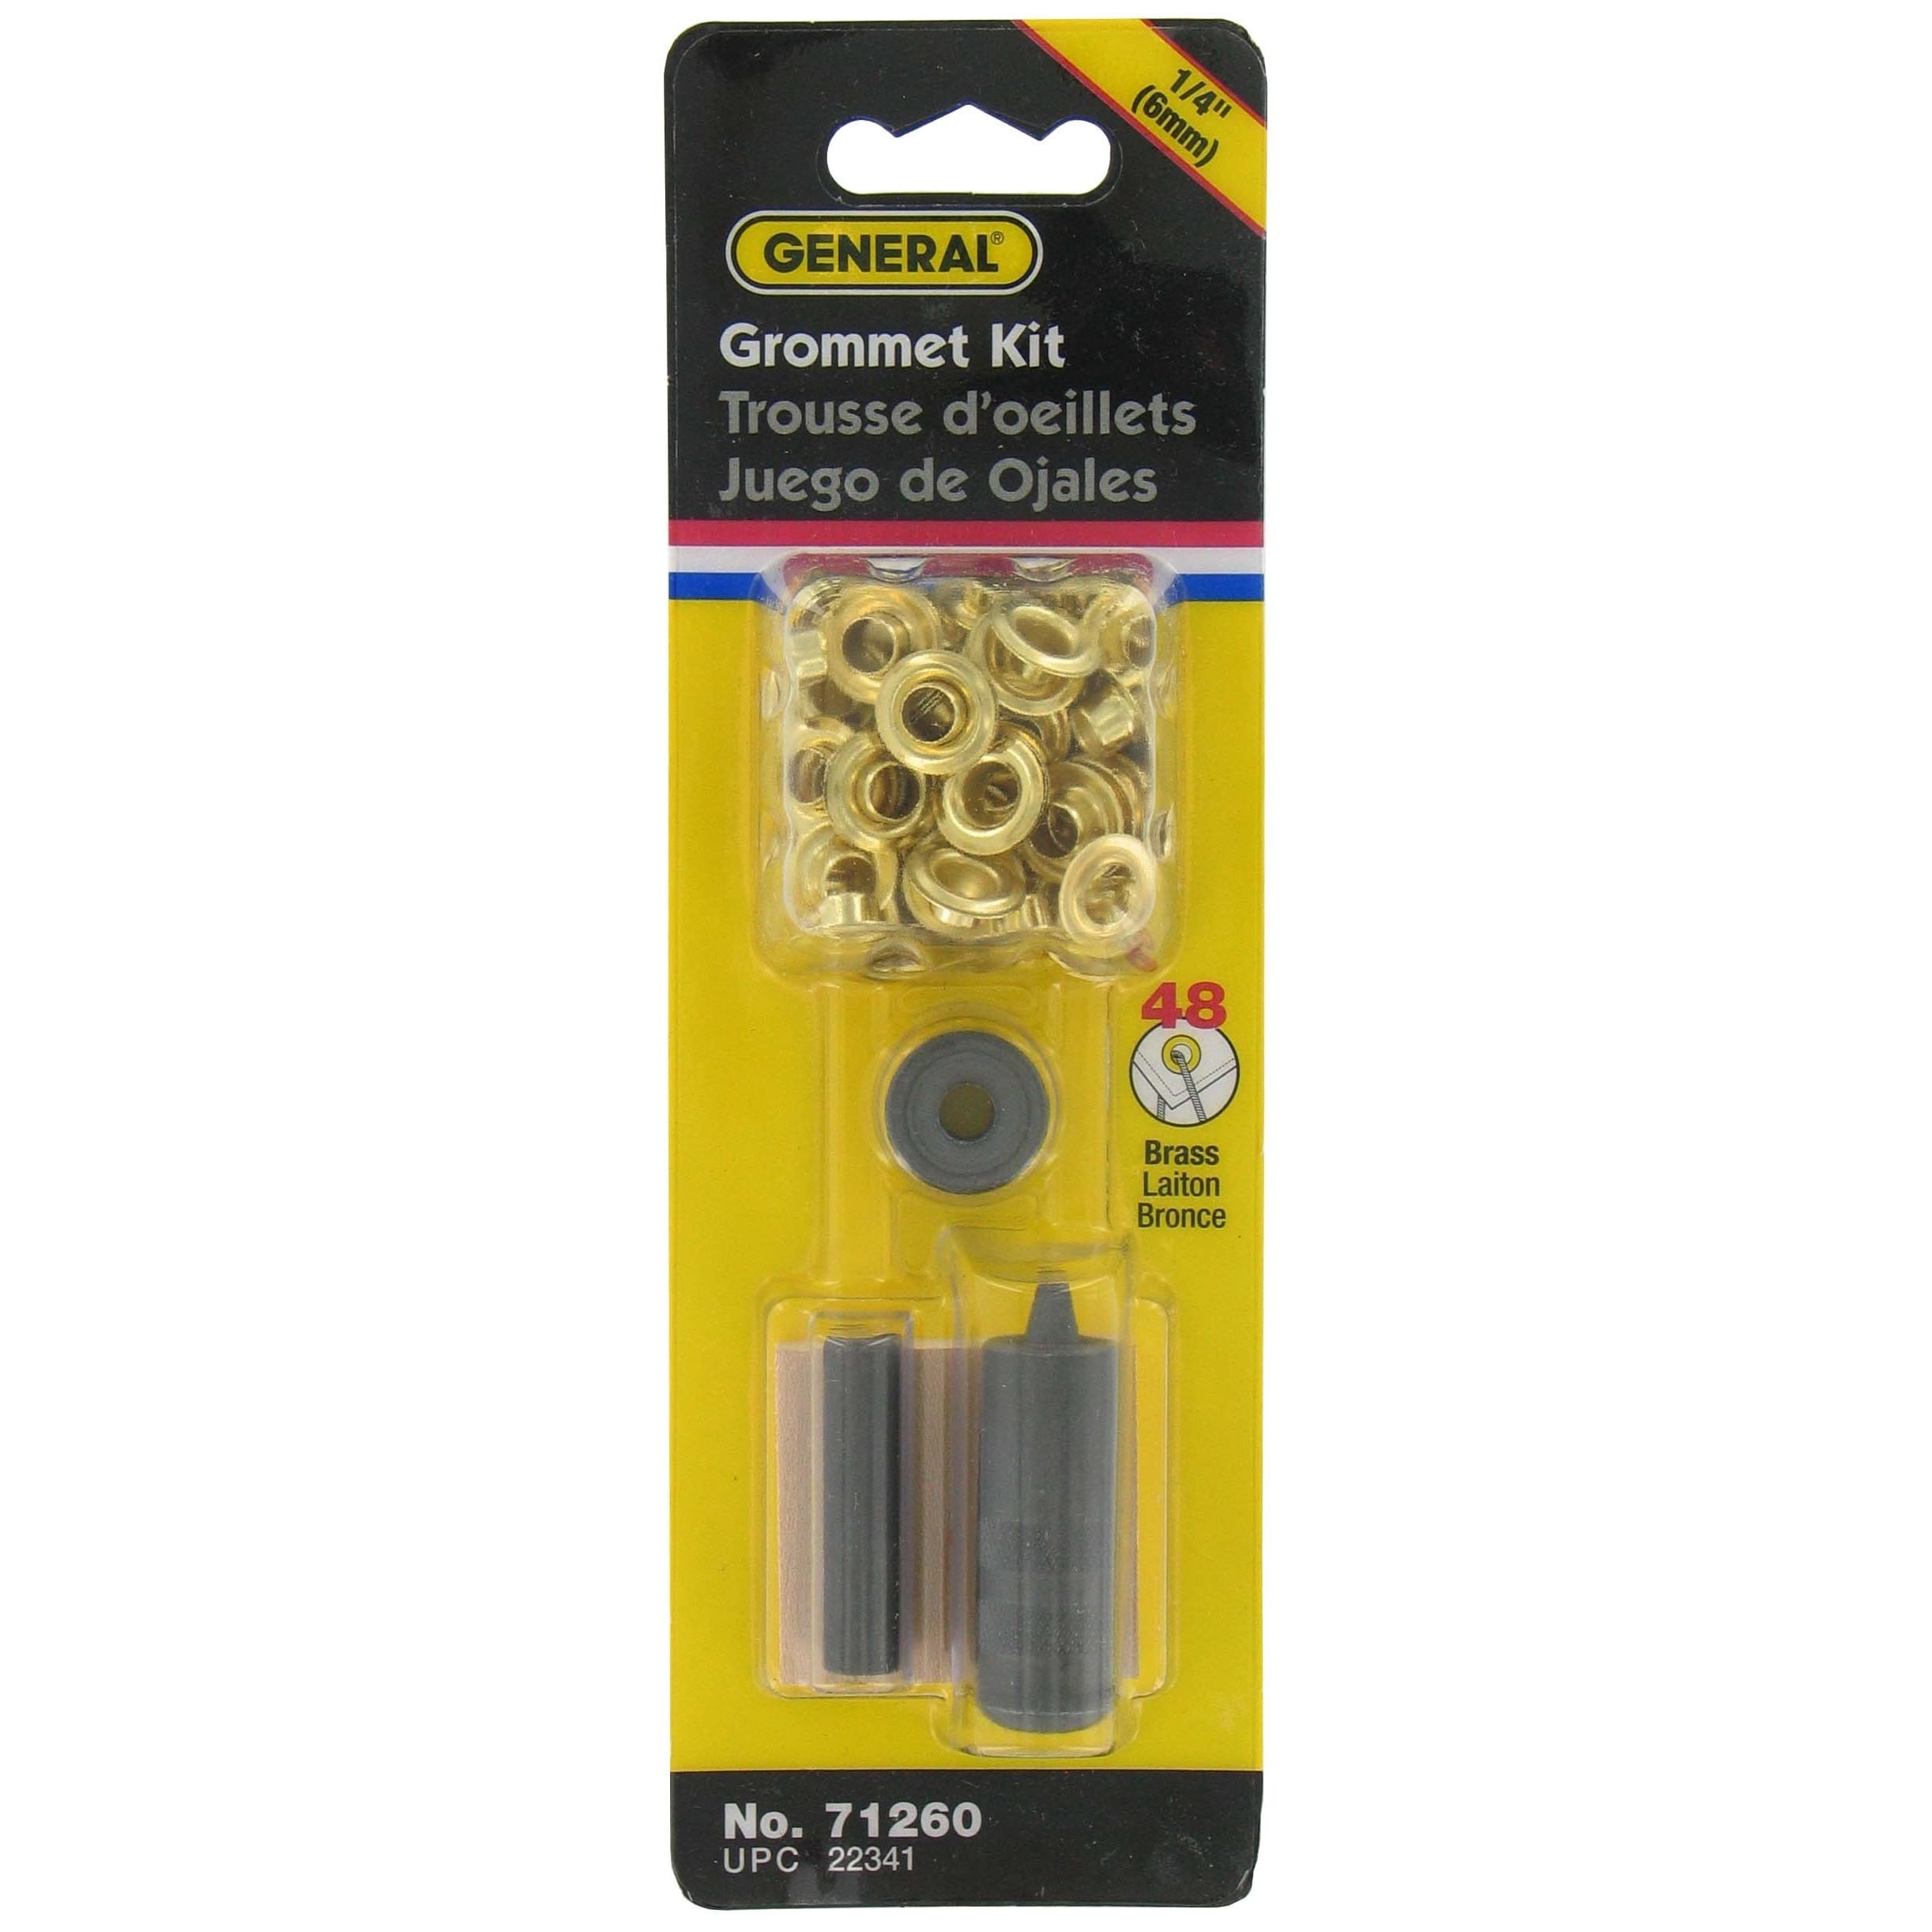 General Tools Grommet Kit, Brass, 1/4 - 48 grommets